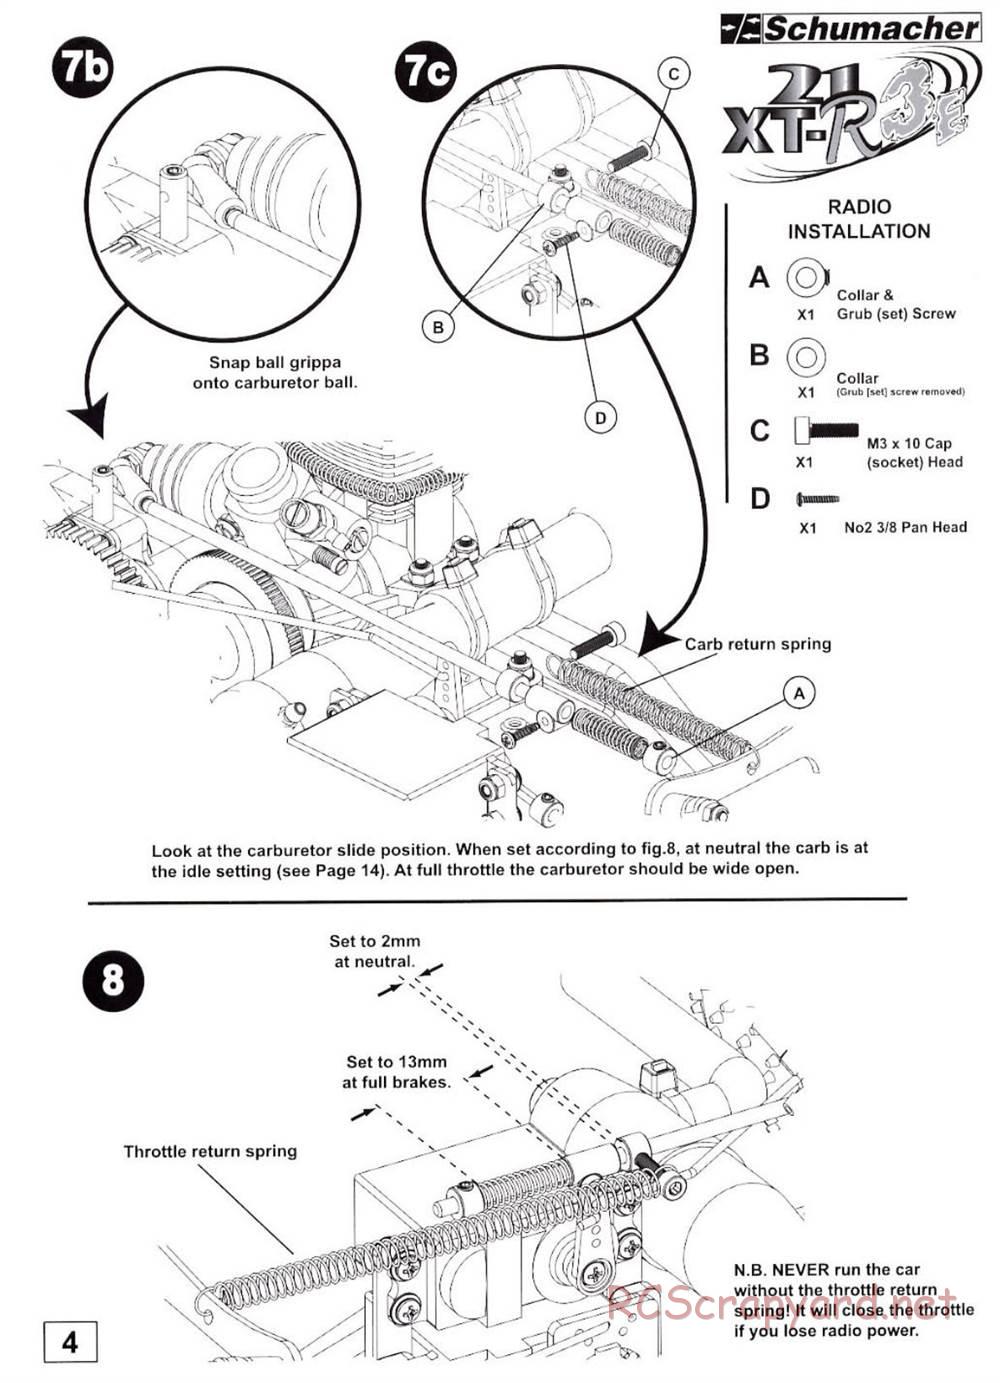 Schumacher - Nitro 21 XT-R3E - Manual - Page 20